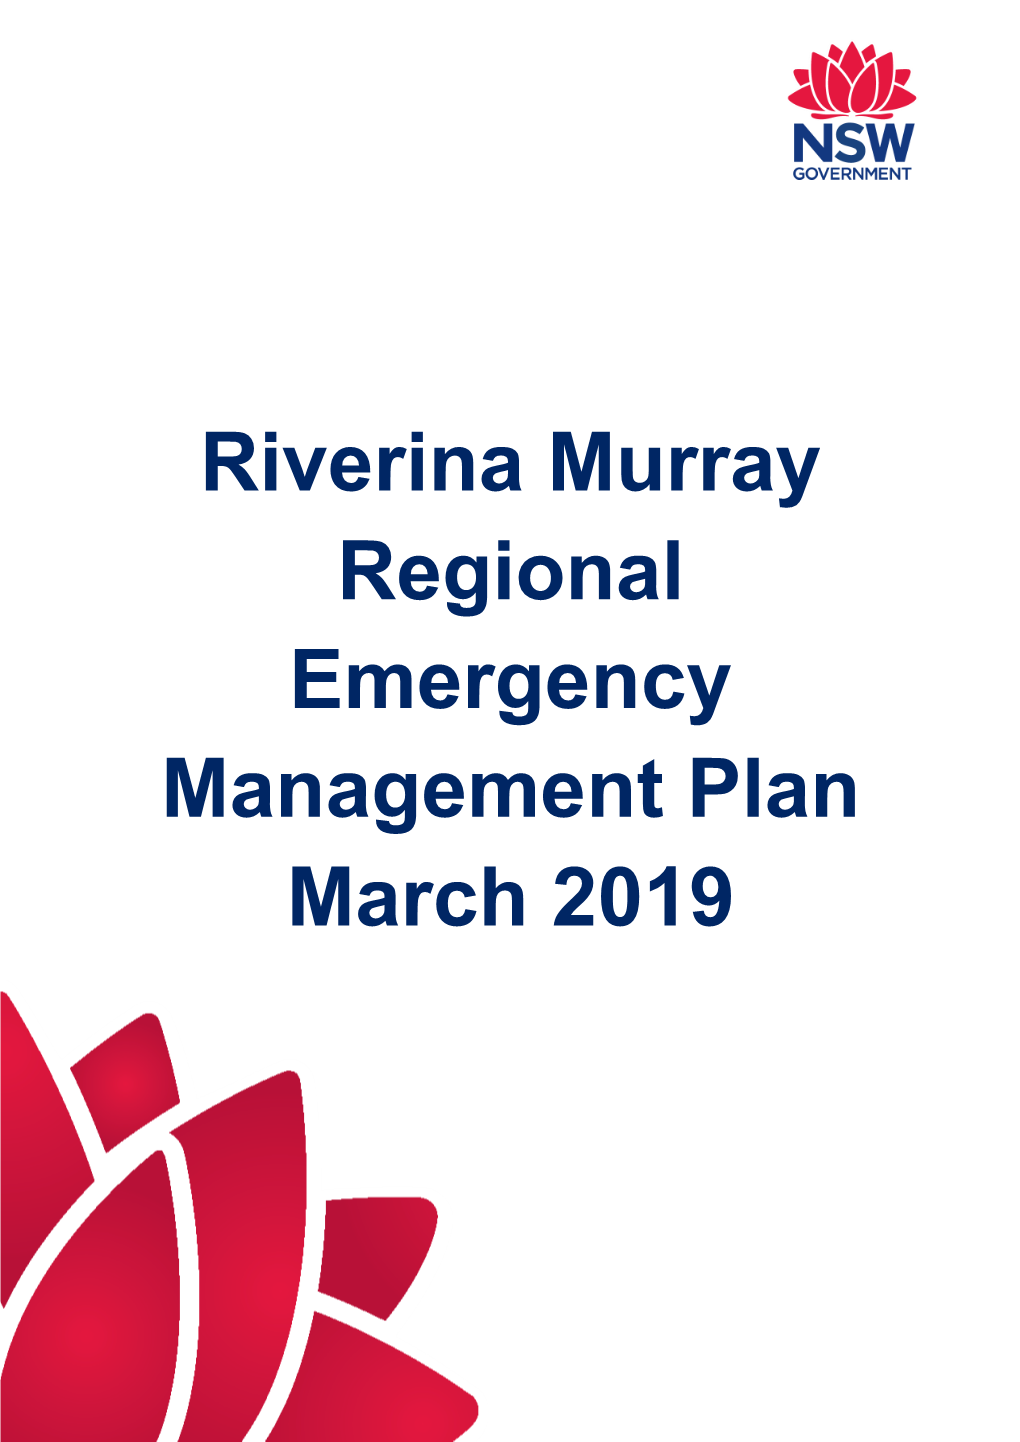 Riverina Murray Regional Emergency Management Plan March 2019 Riverina Murray Regional Emergency Management Plan